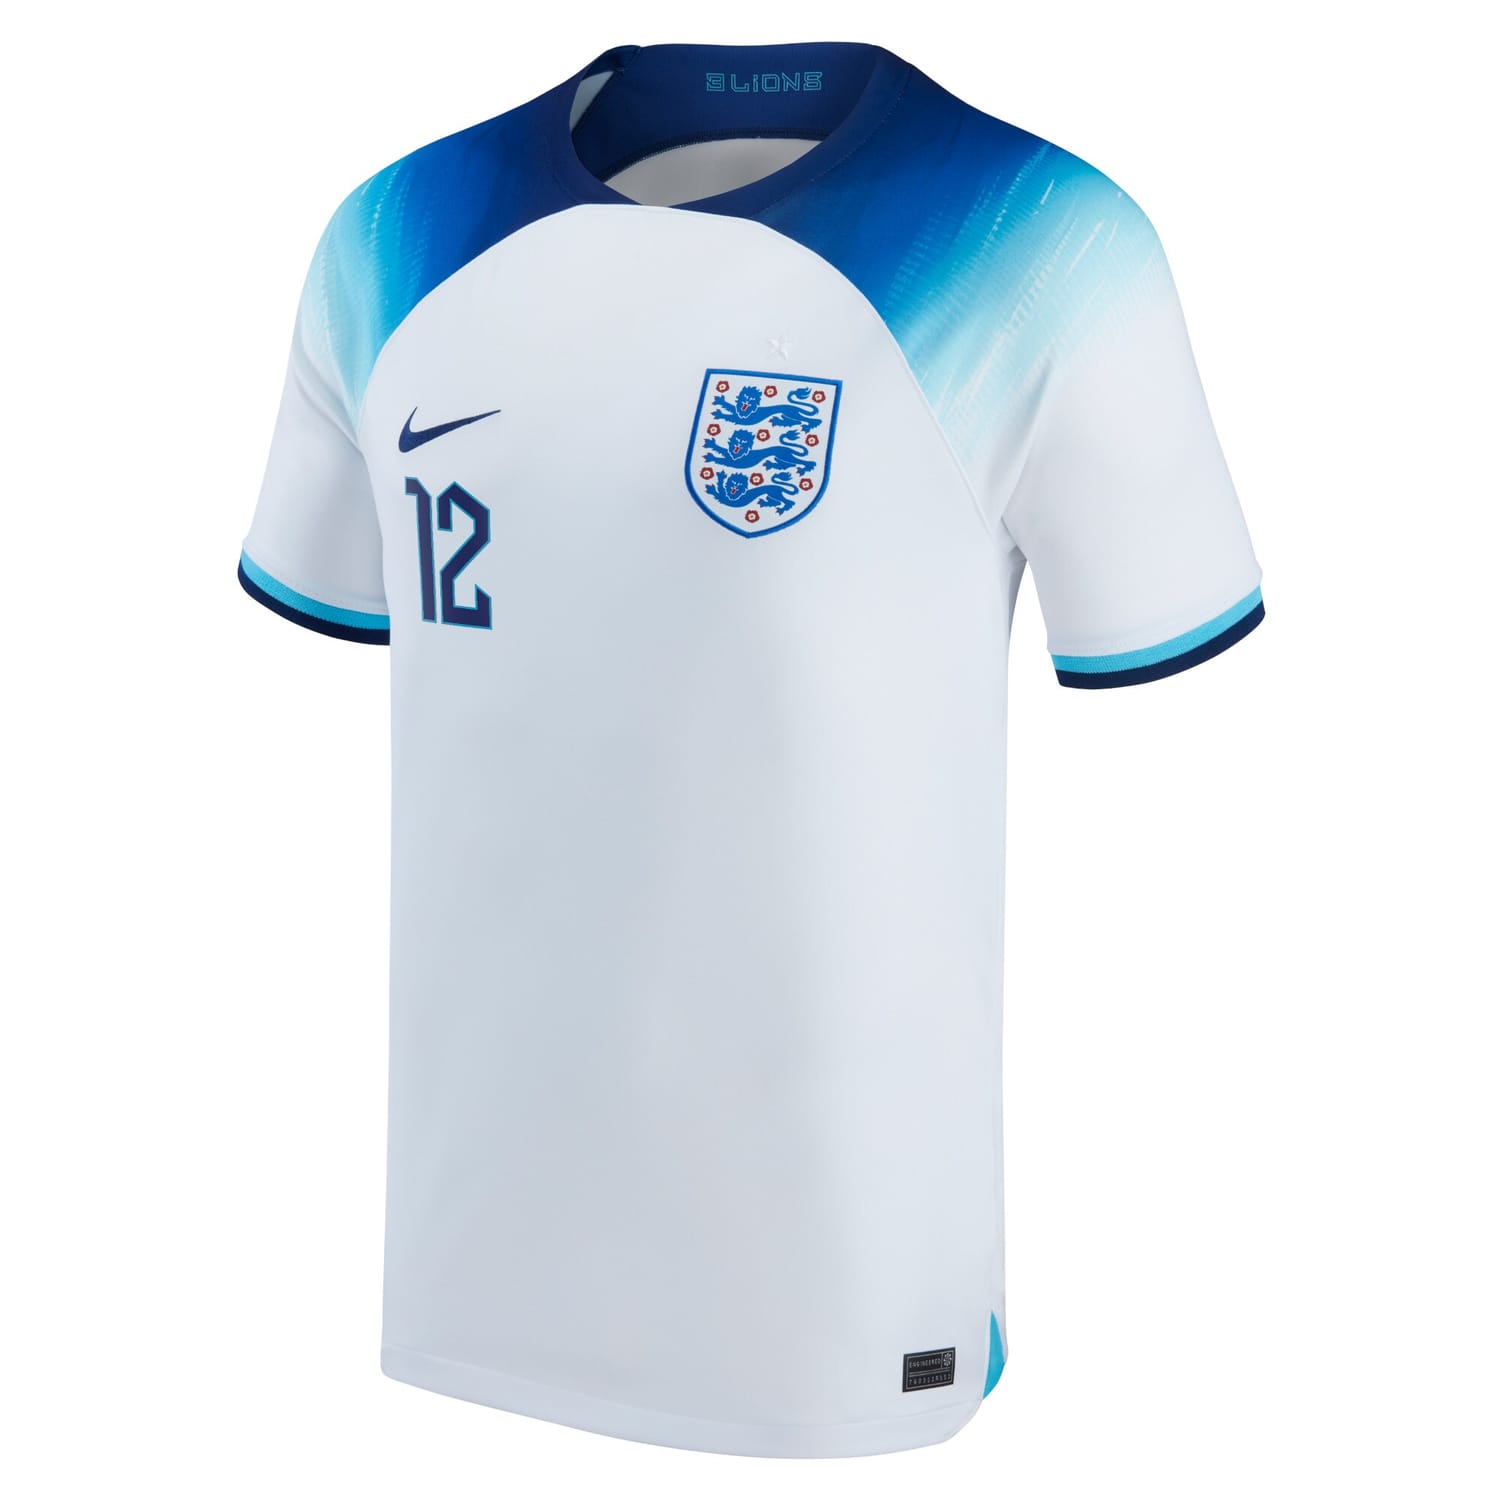 England National Team Home Jersey Shirt 2022 player Kieran Trippier 12 printing for Men